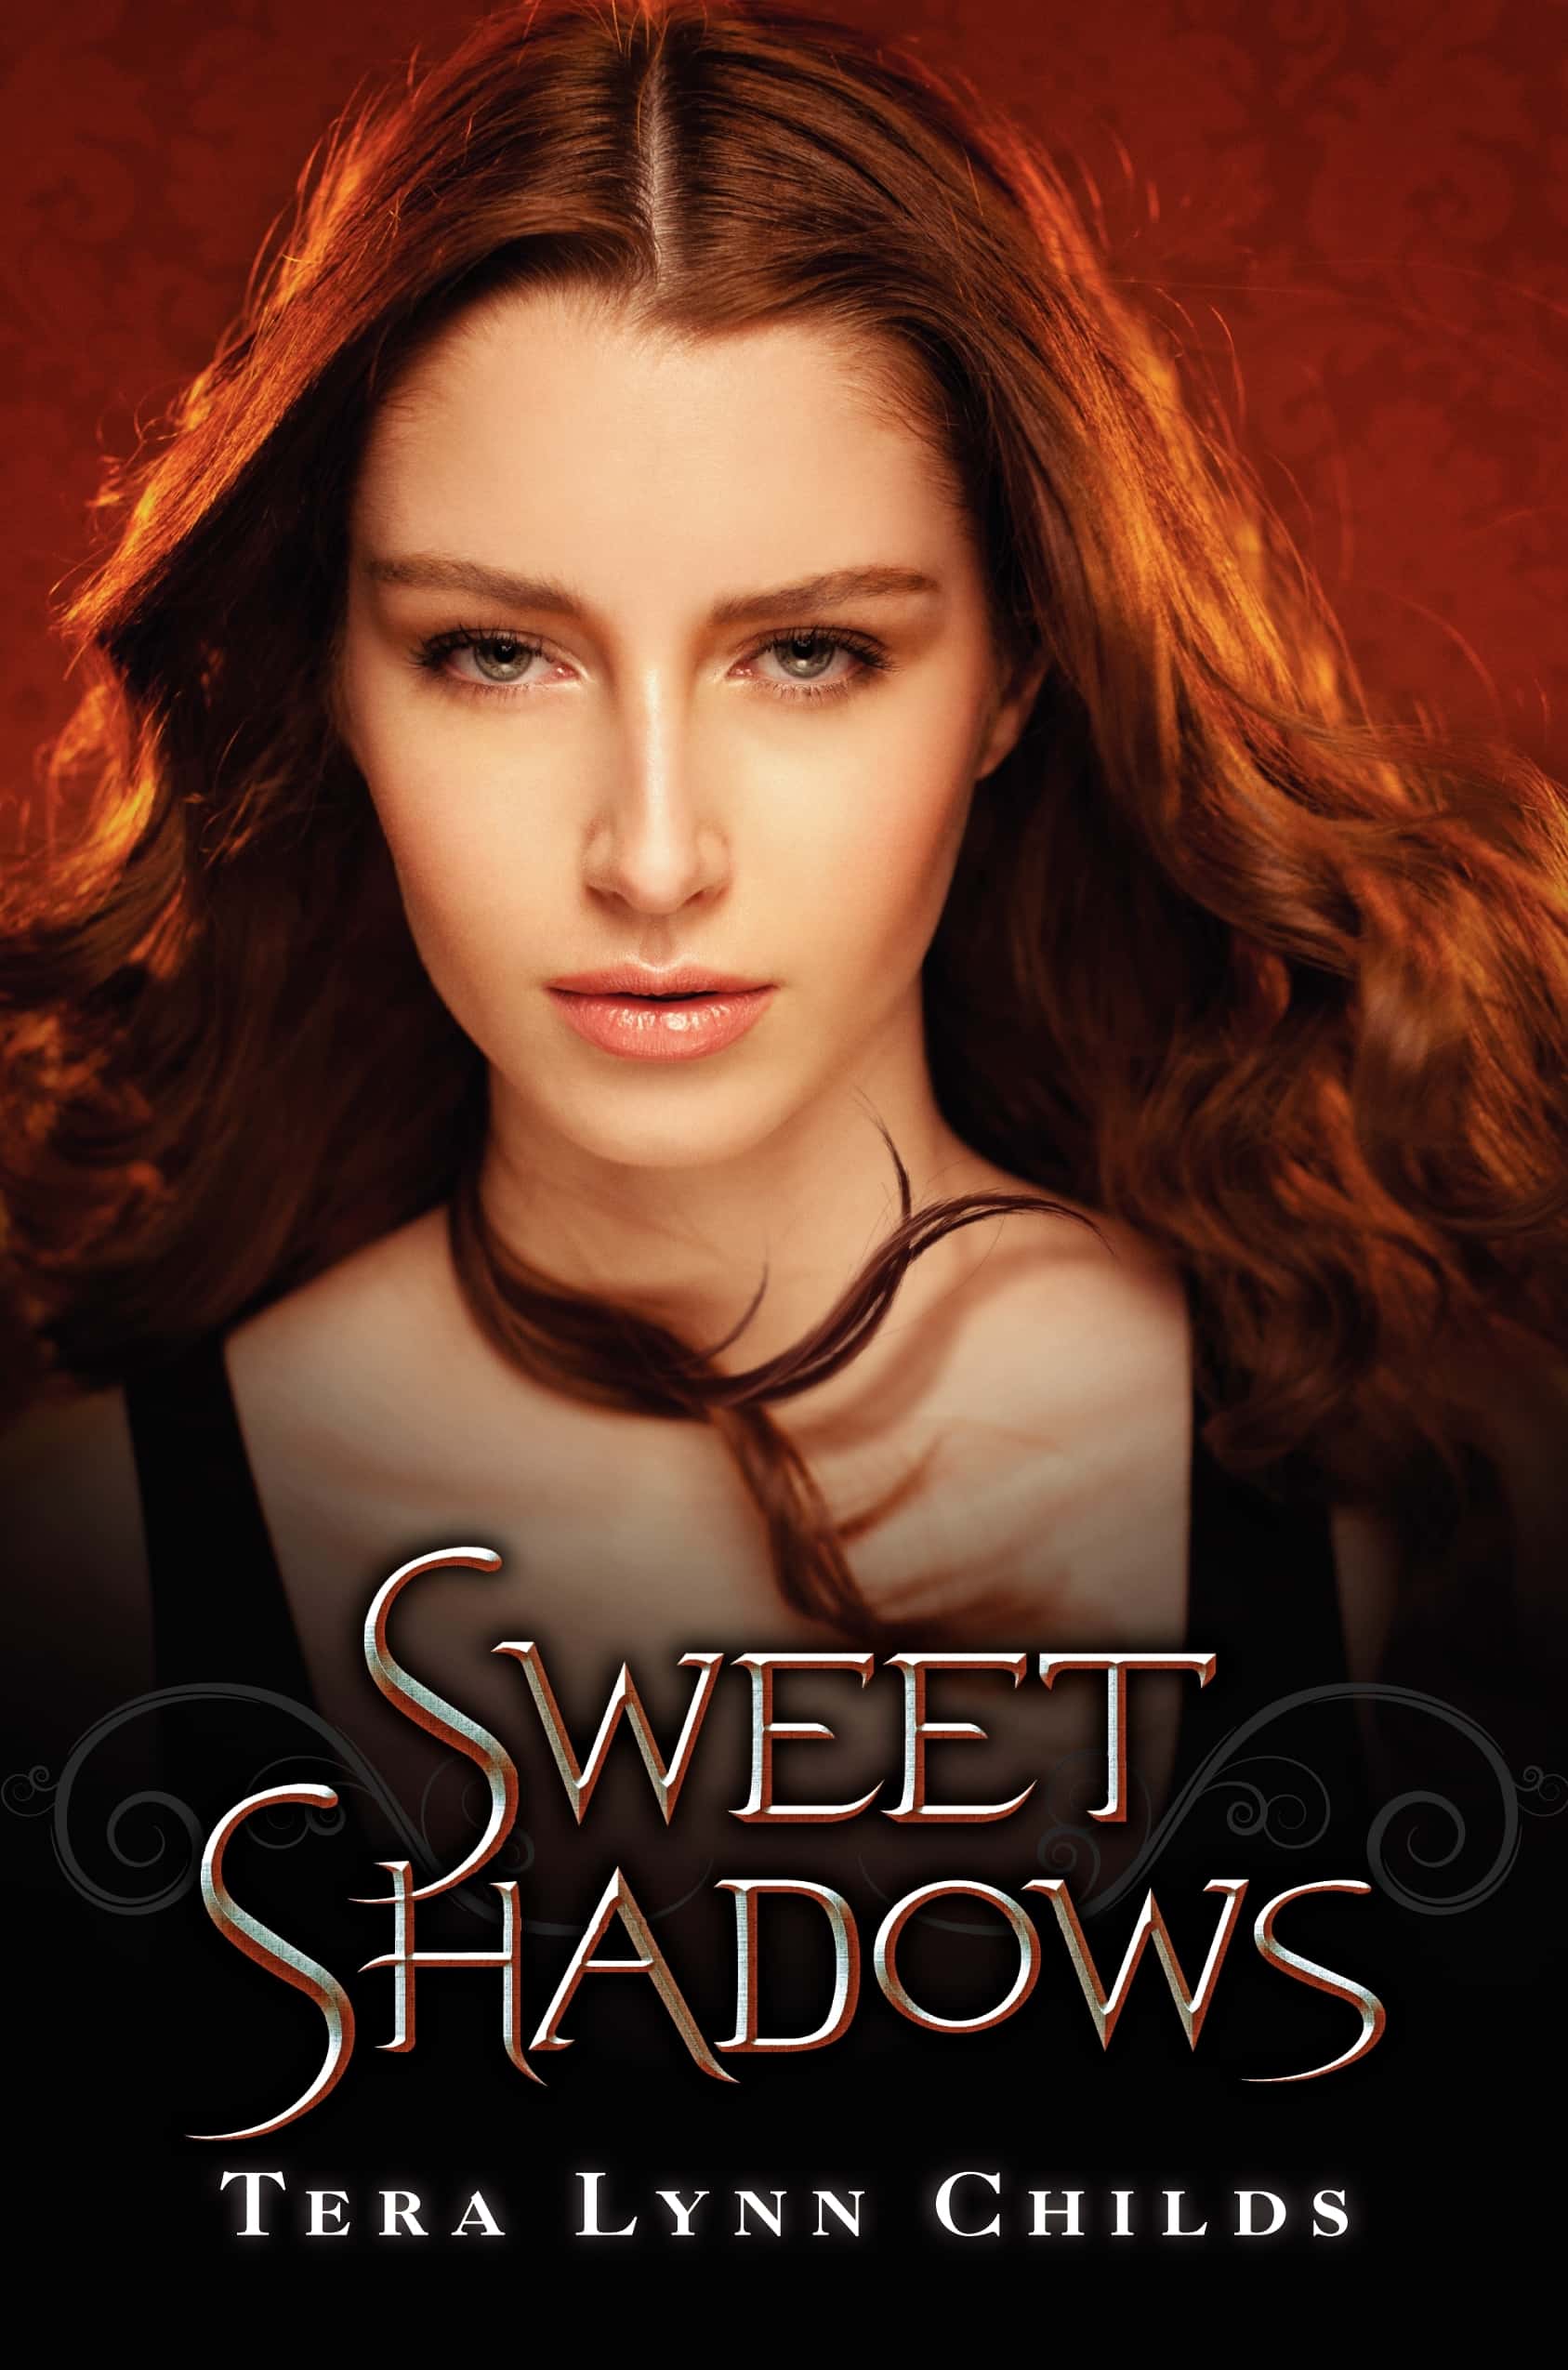 Sweet Shadows by Tera Lynn Childs